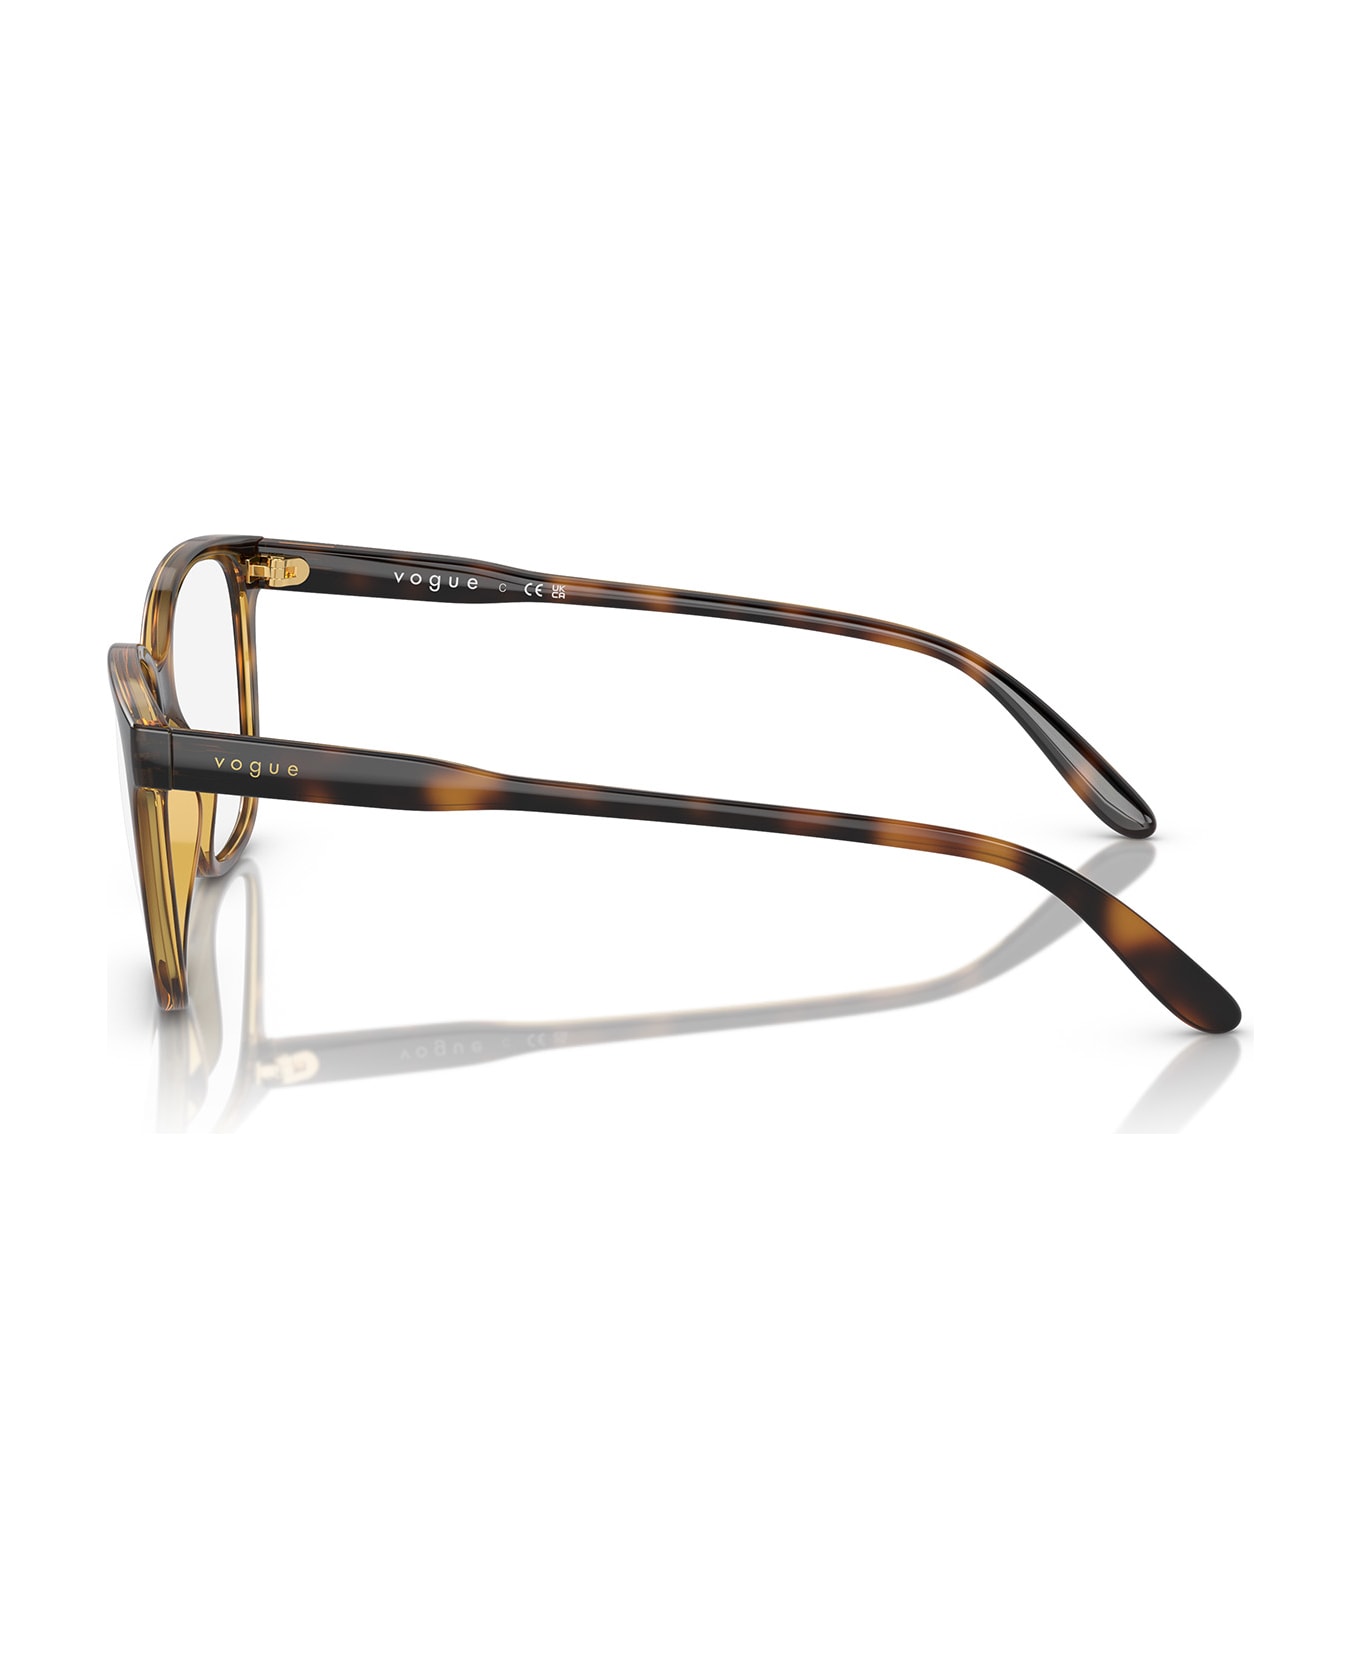 Vogue Eyewear Vo5518 Dark Havana Glasses - Dark Havana アイウェア